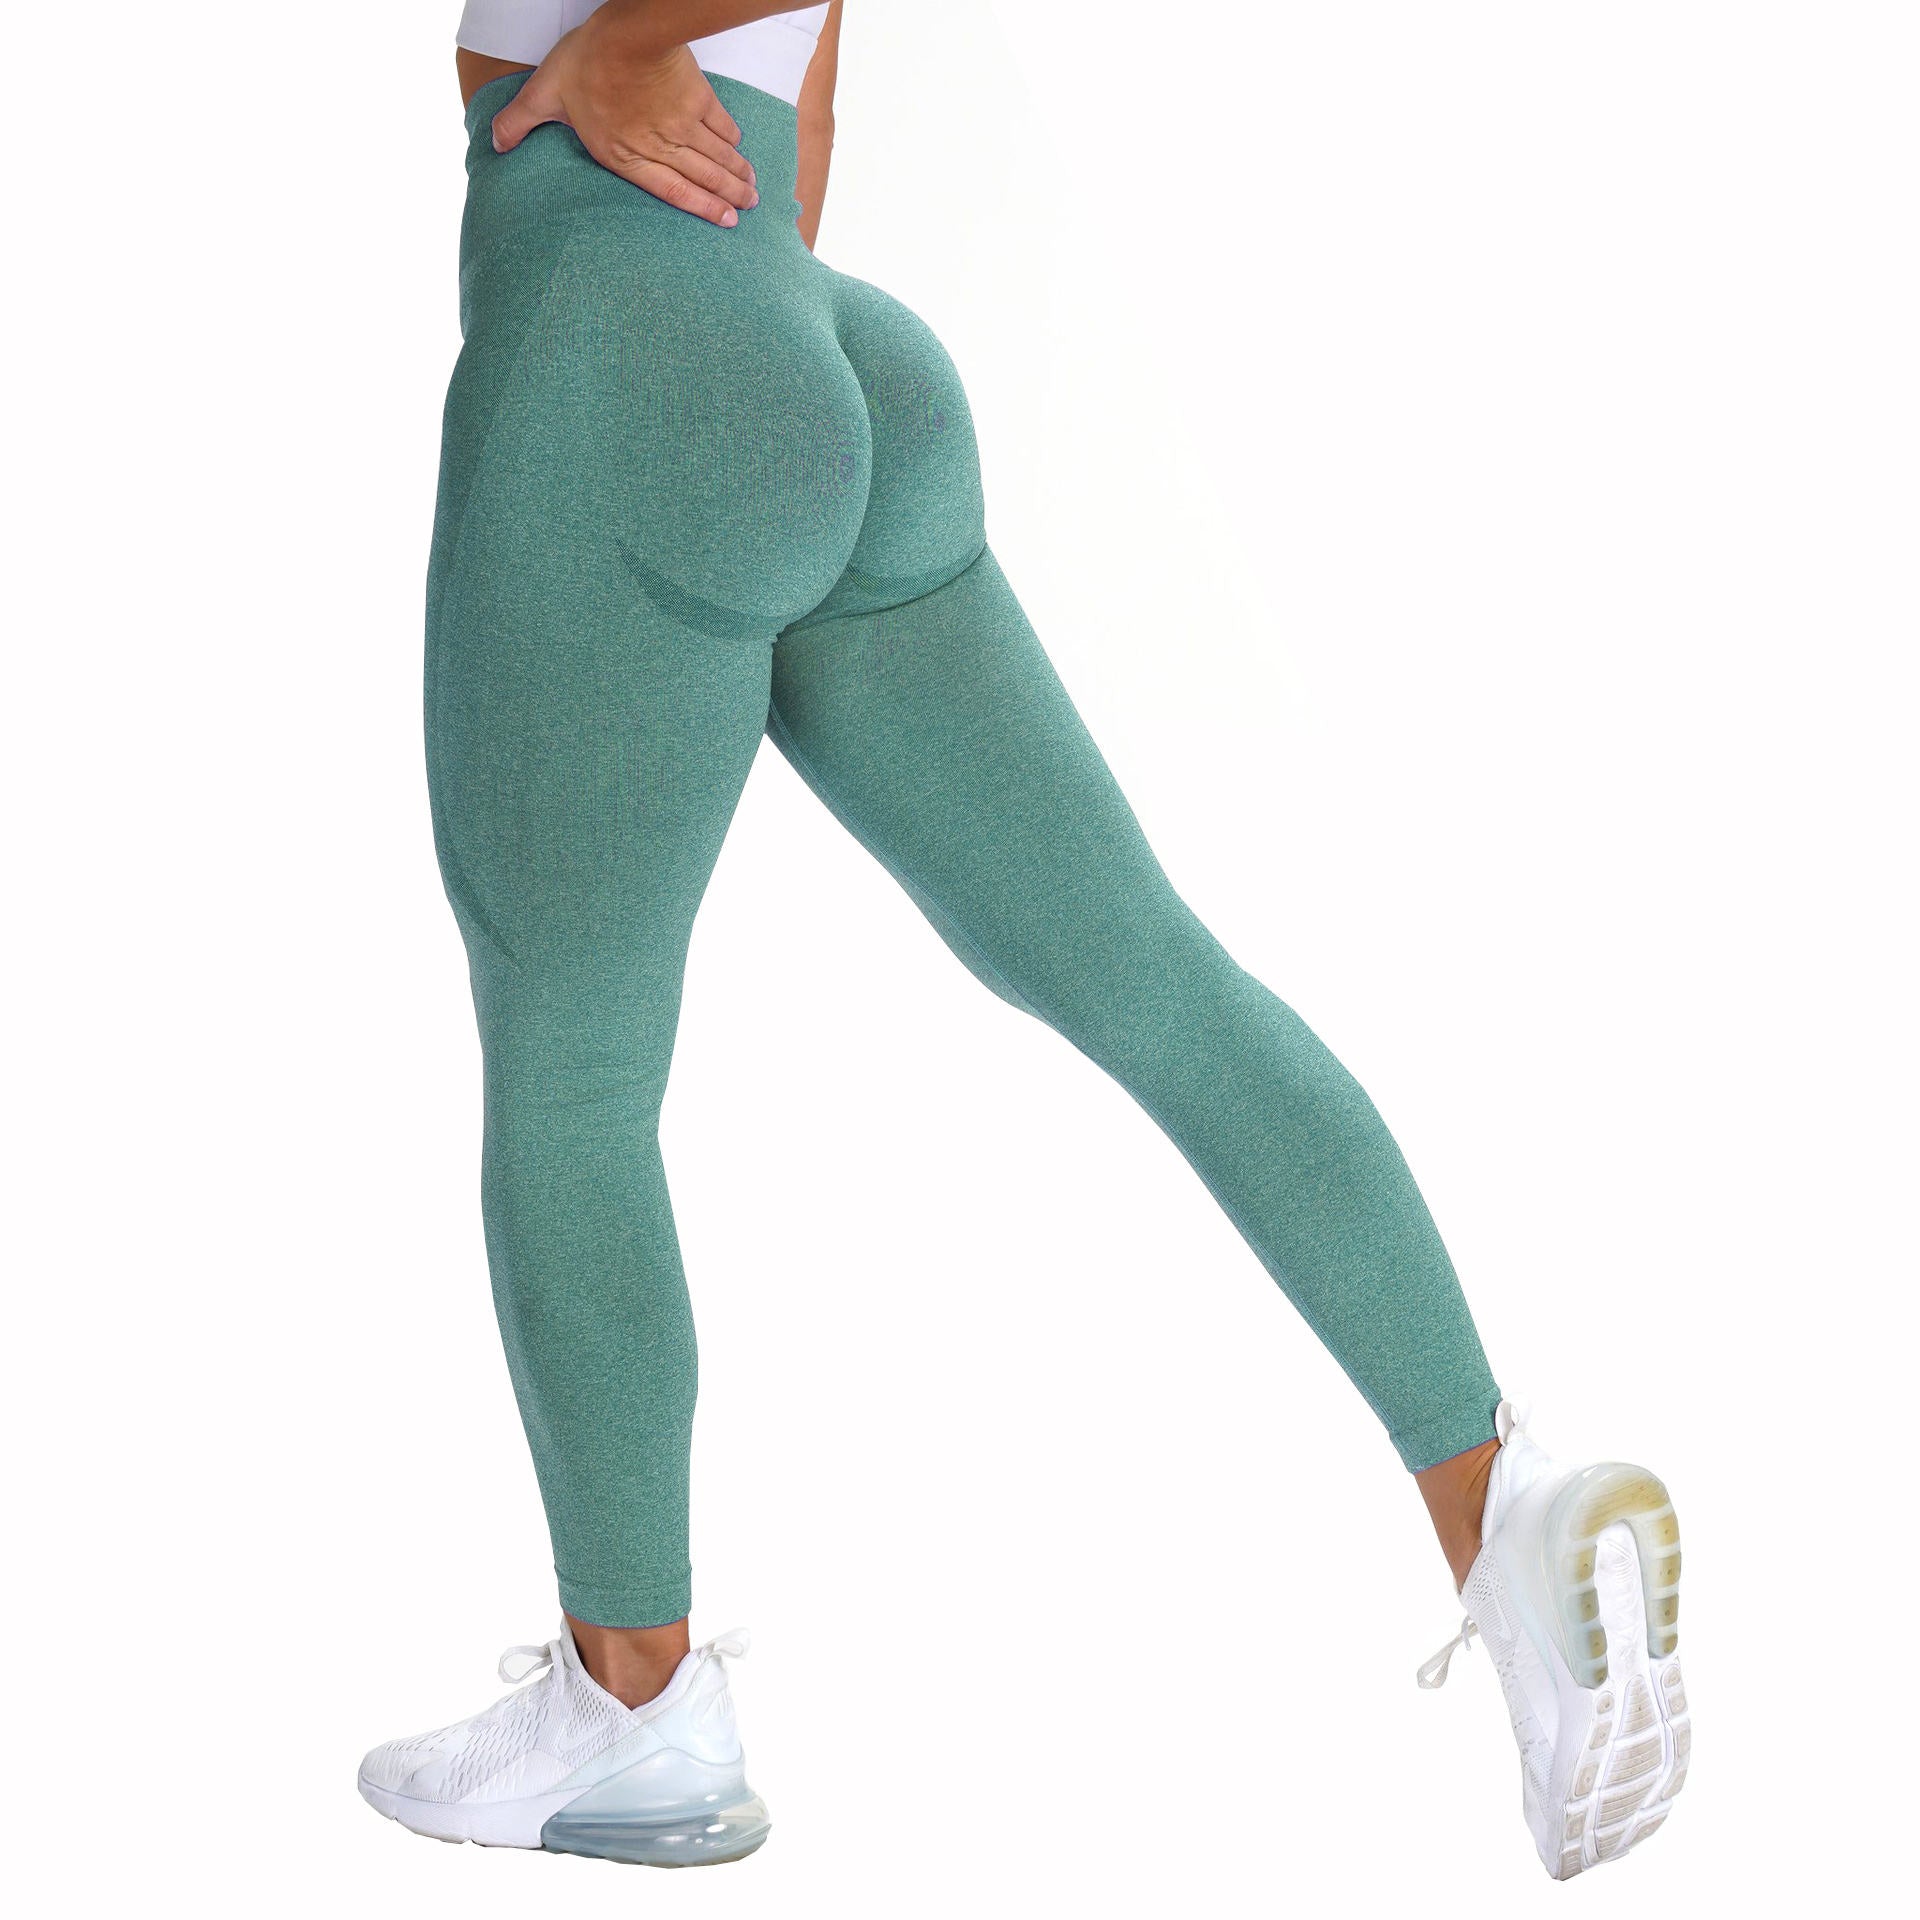 ATTLADY Shapewear for Women Tummy Control High Waisted Yoga Pants